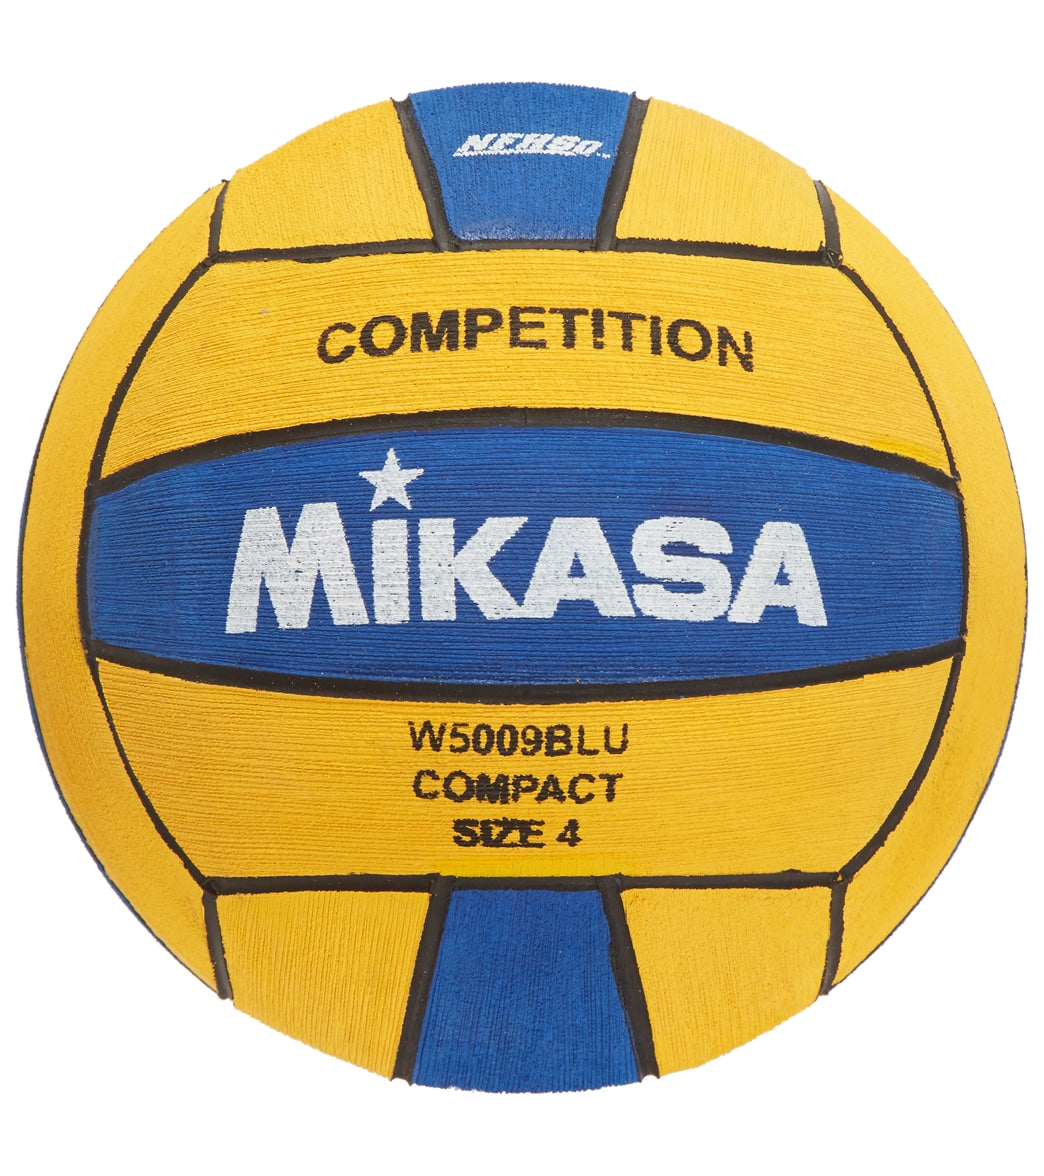 Mikasa Premier Series Compact Size 4 Water Polo Ball